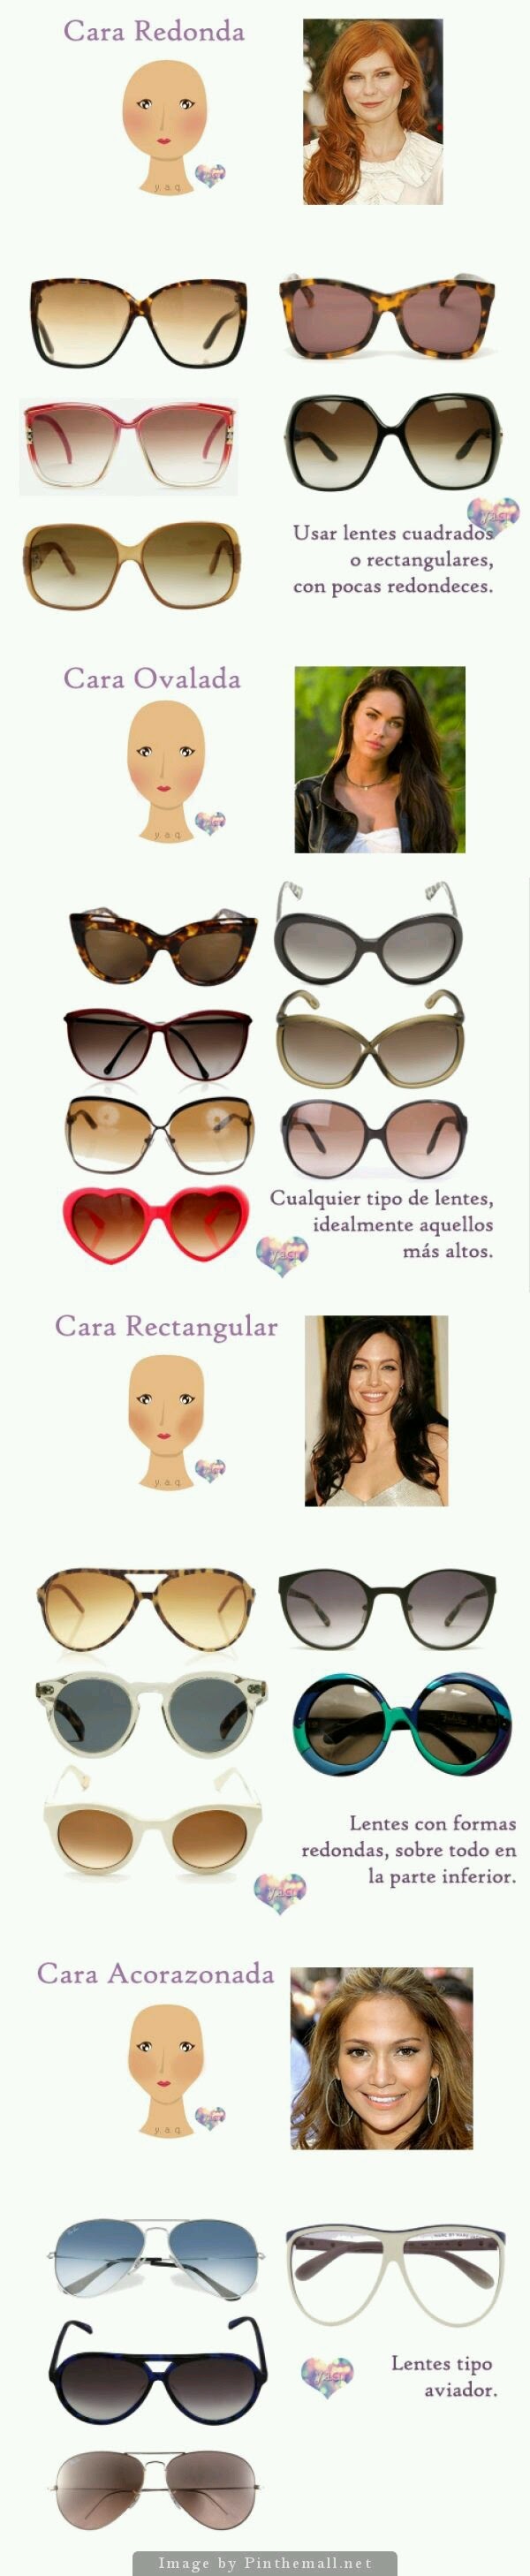 How you should choose sunglasses